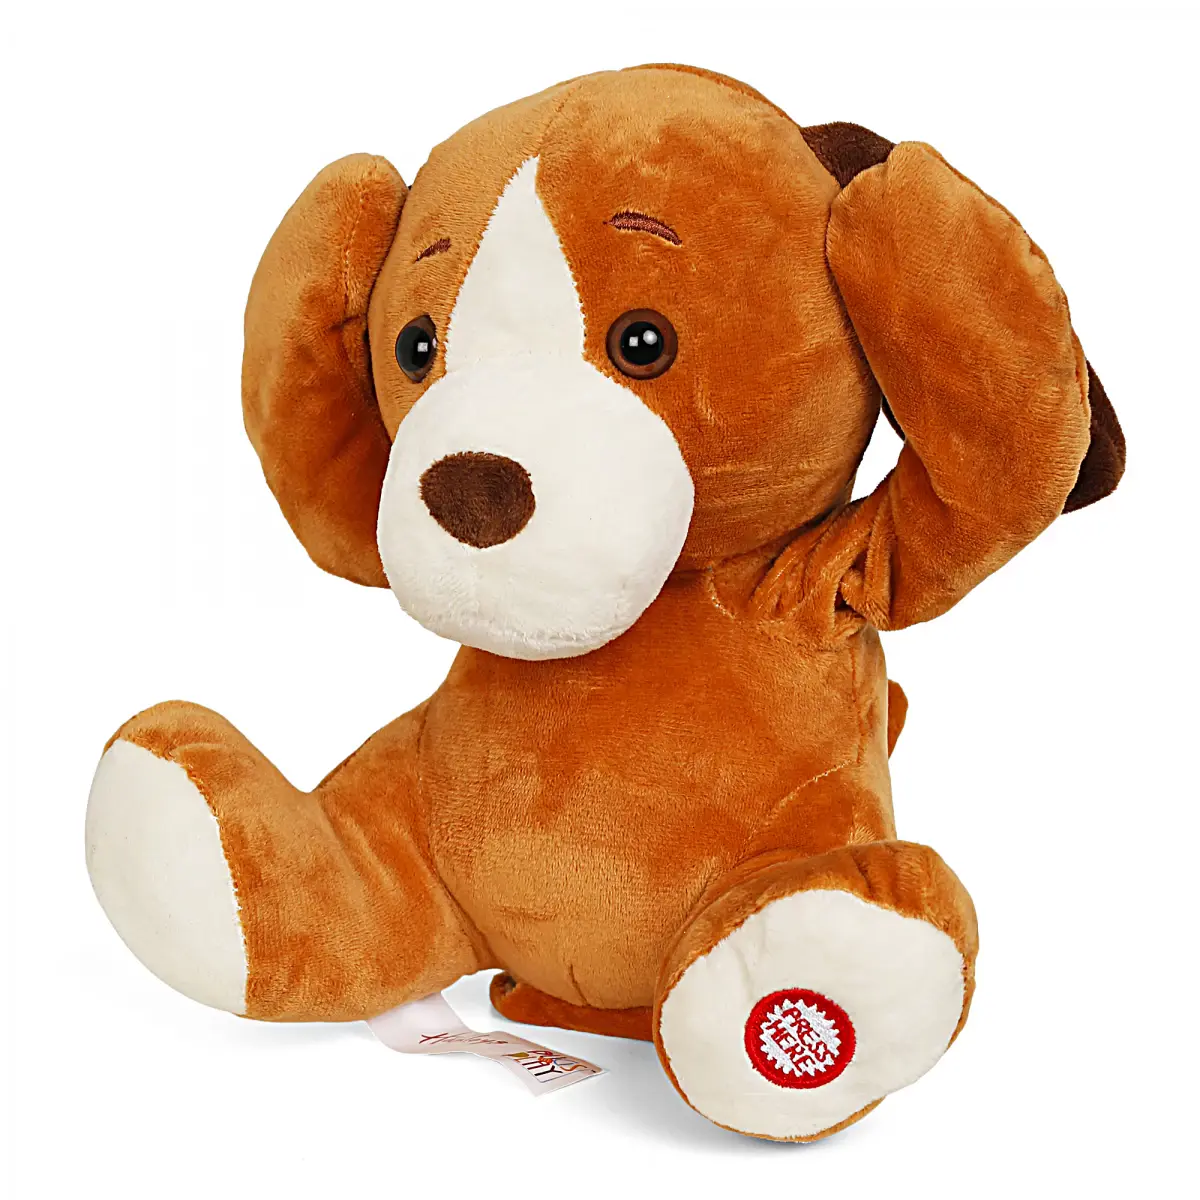 Hamleys Pugs at Play Peek A Boo Dash Dog, Pets Walking Activity Animal Toy, Kids for 3Y+, Brown